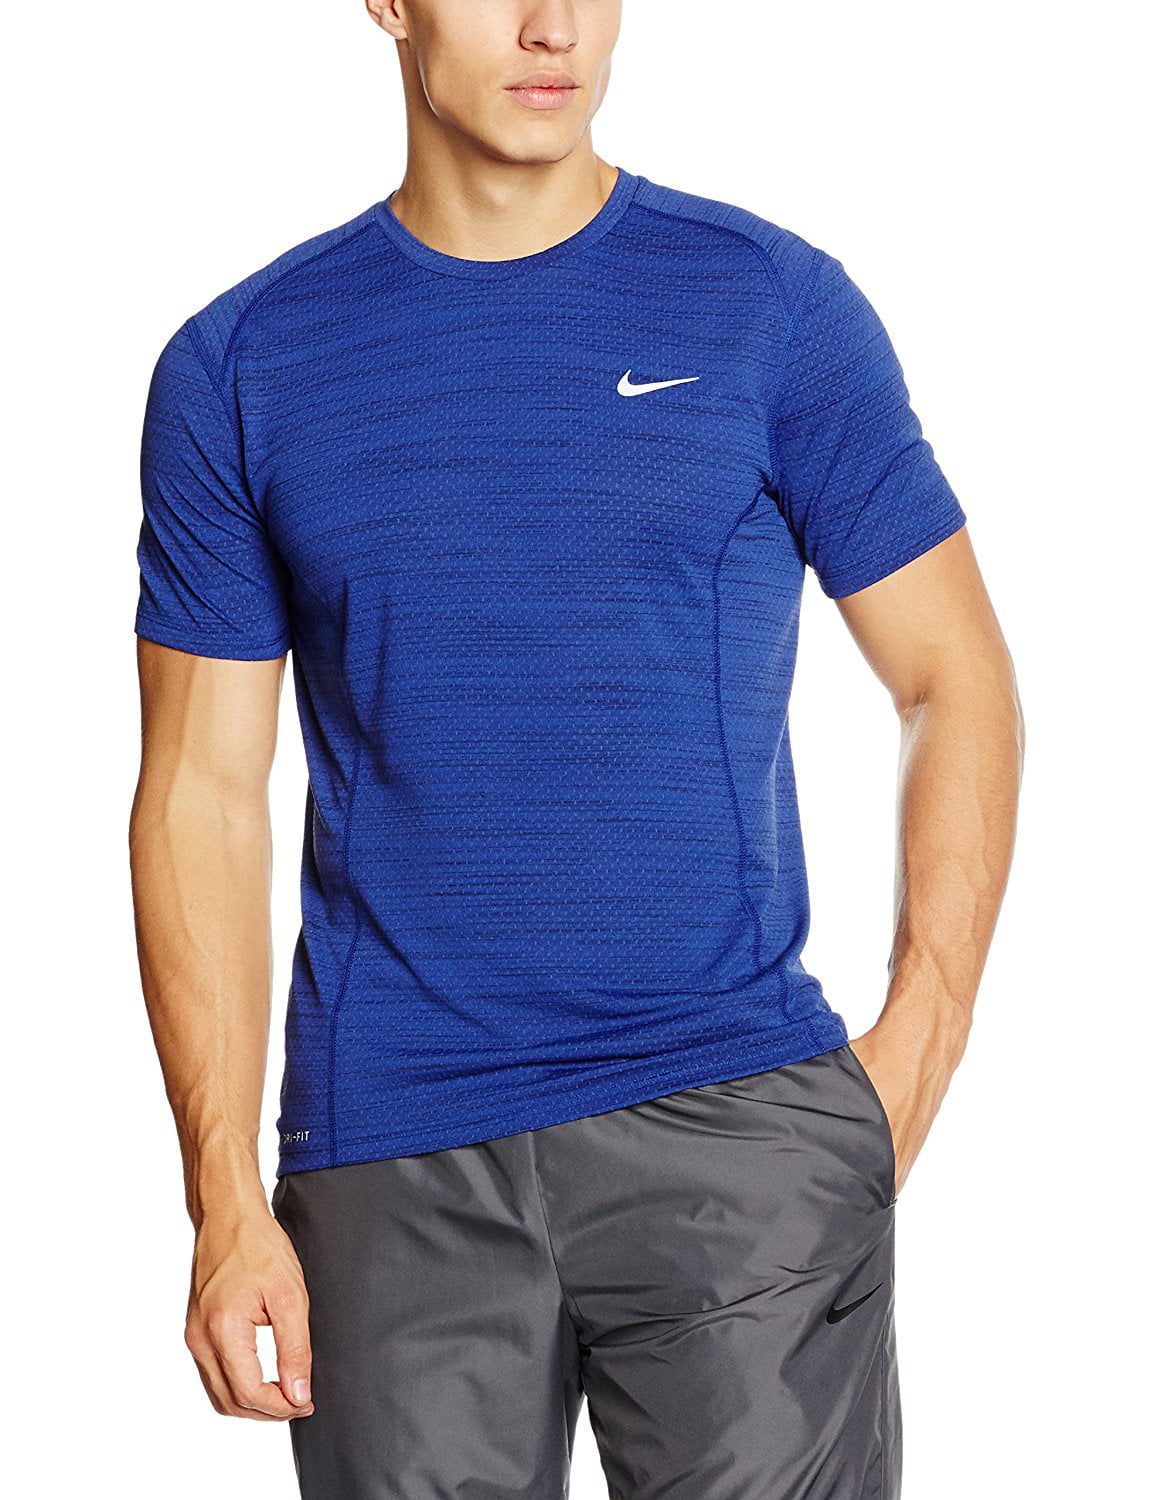 Nike - Nike Men's Dri-Fit Cool Miler Running Shirt-Blue - Walmart.com ...